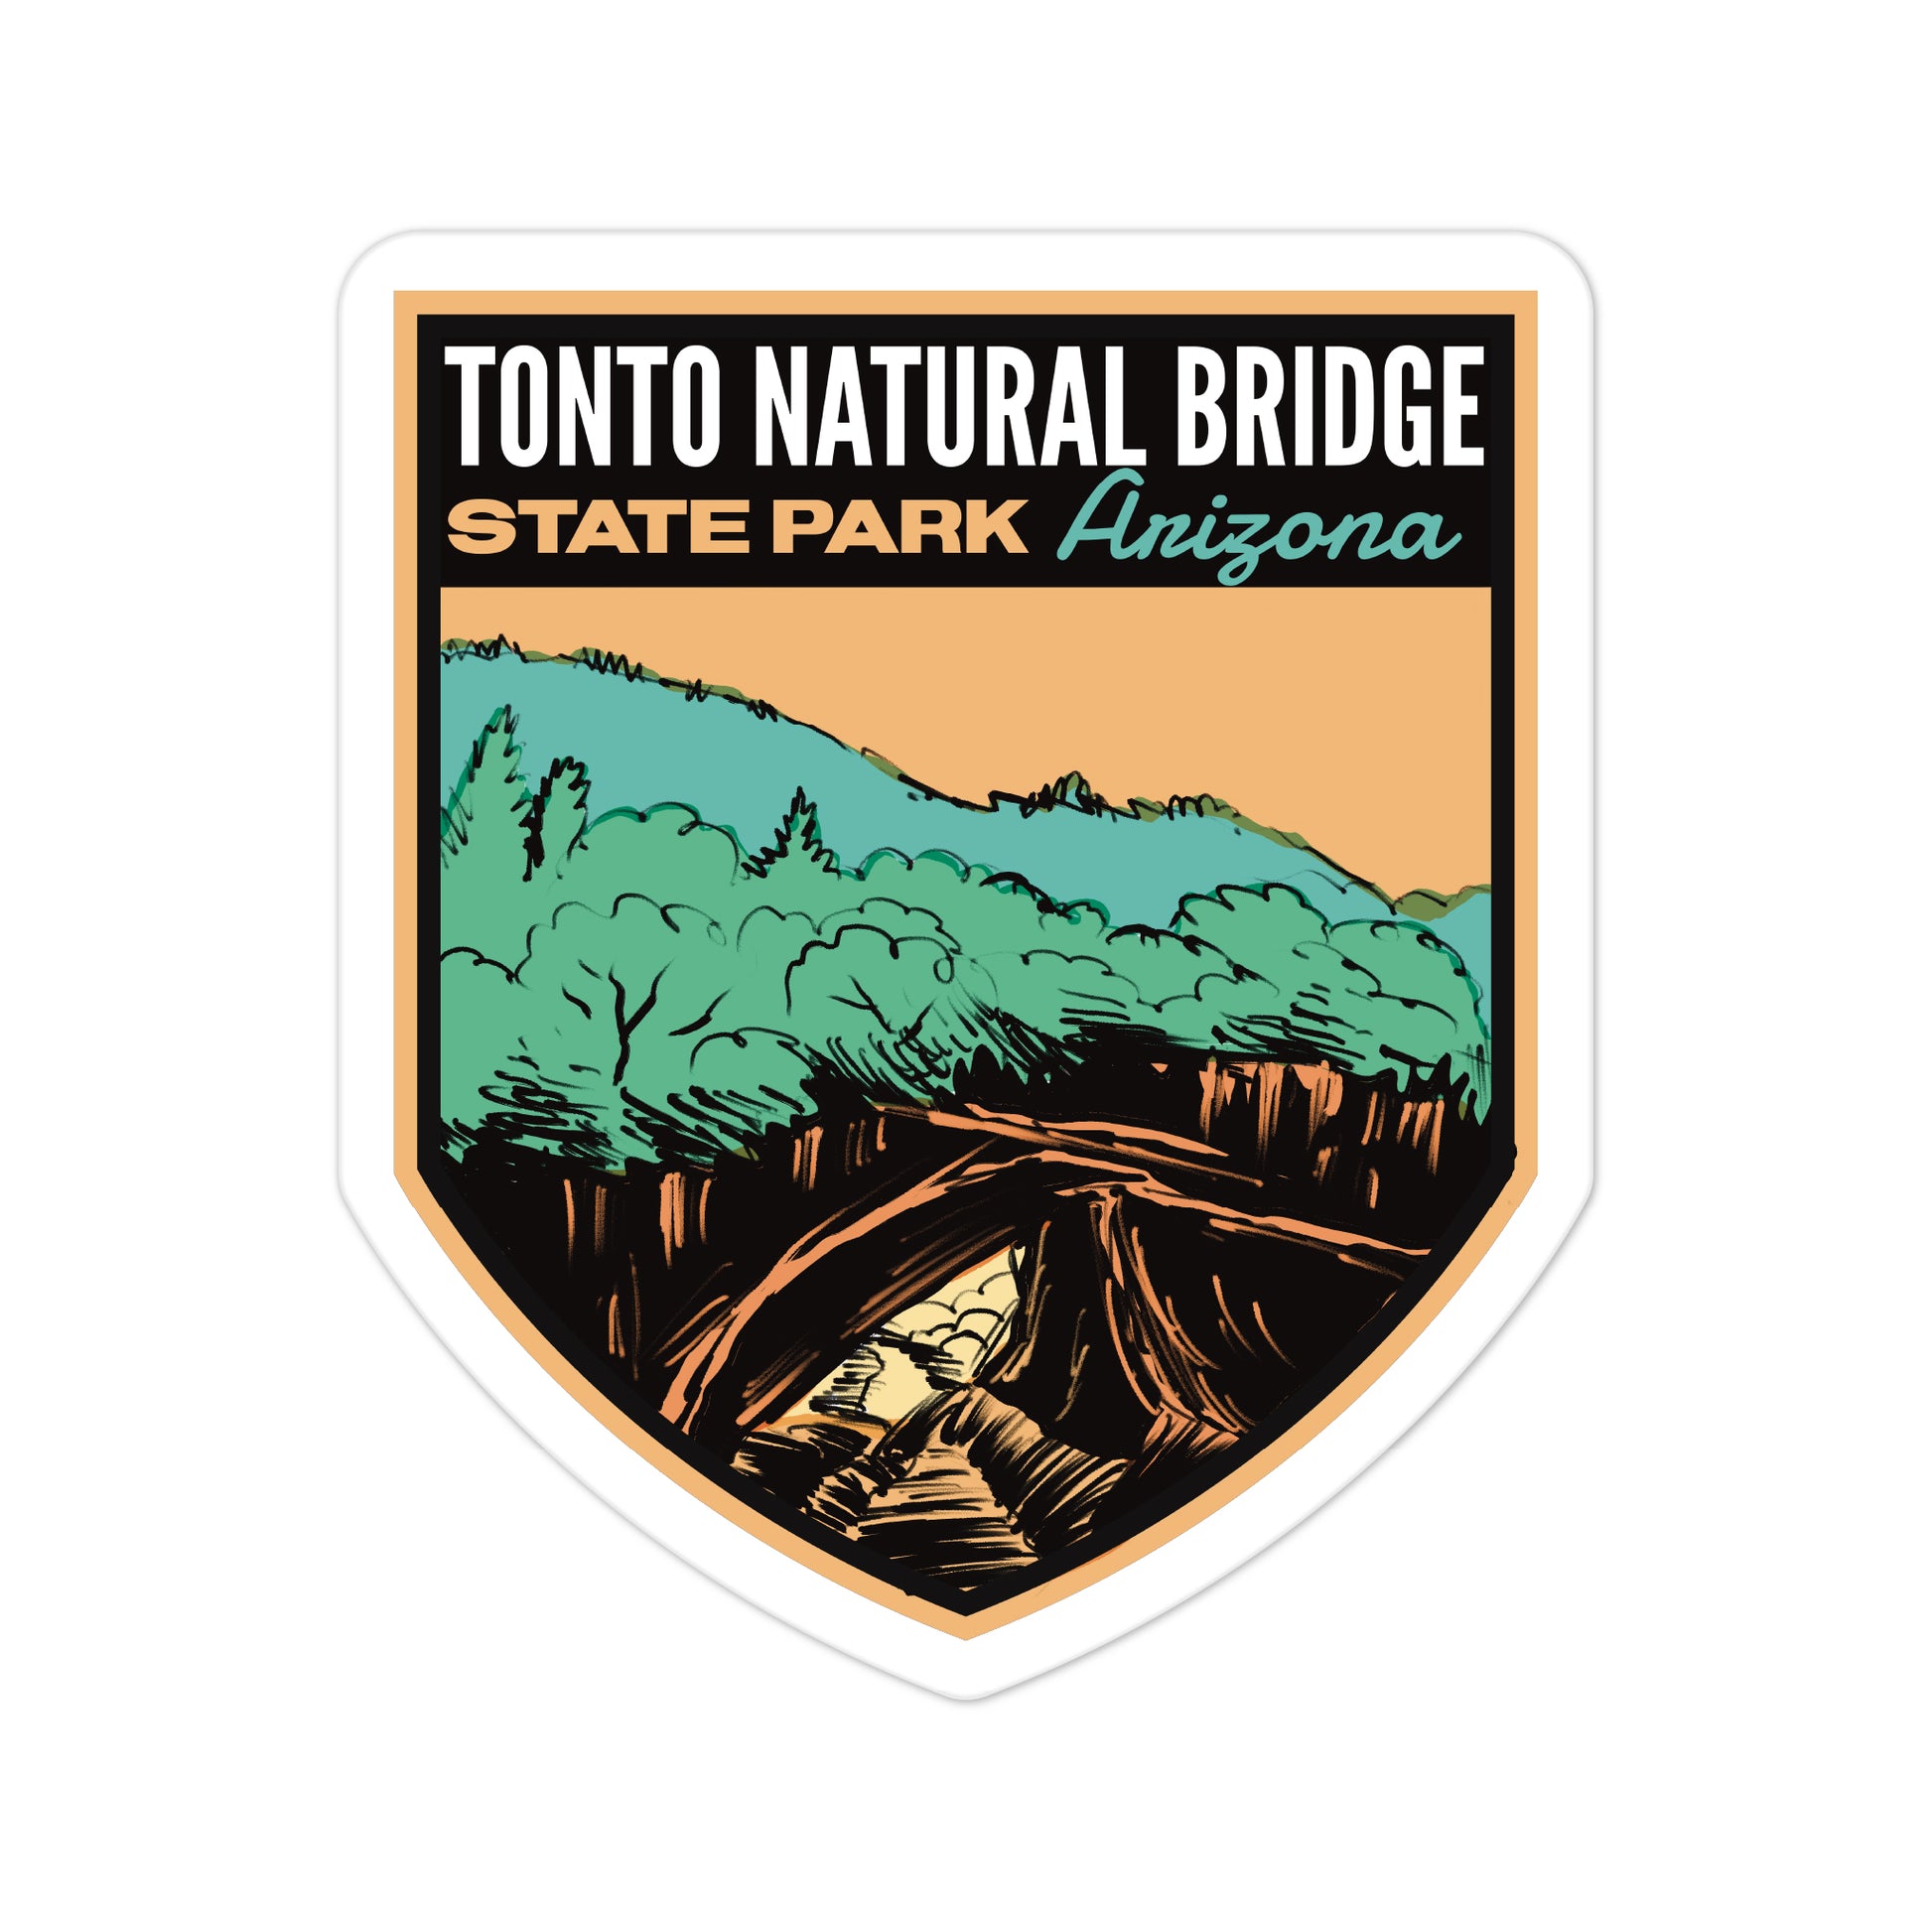 A sticker of Tonto Natural Bridge